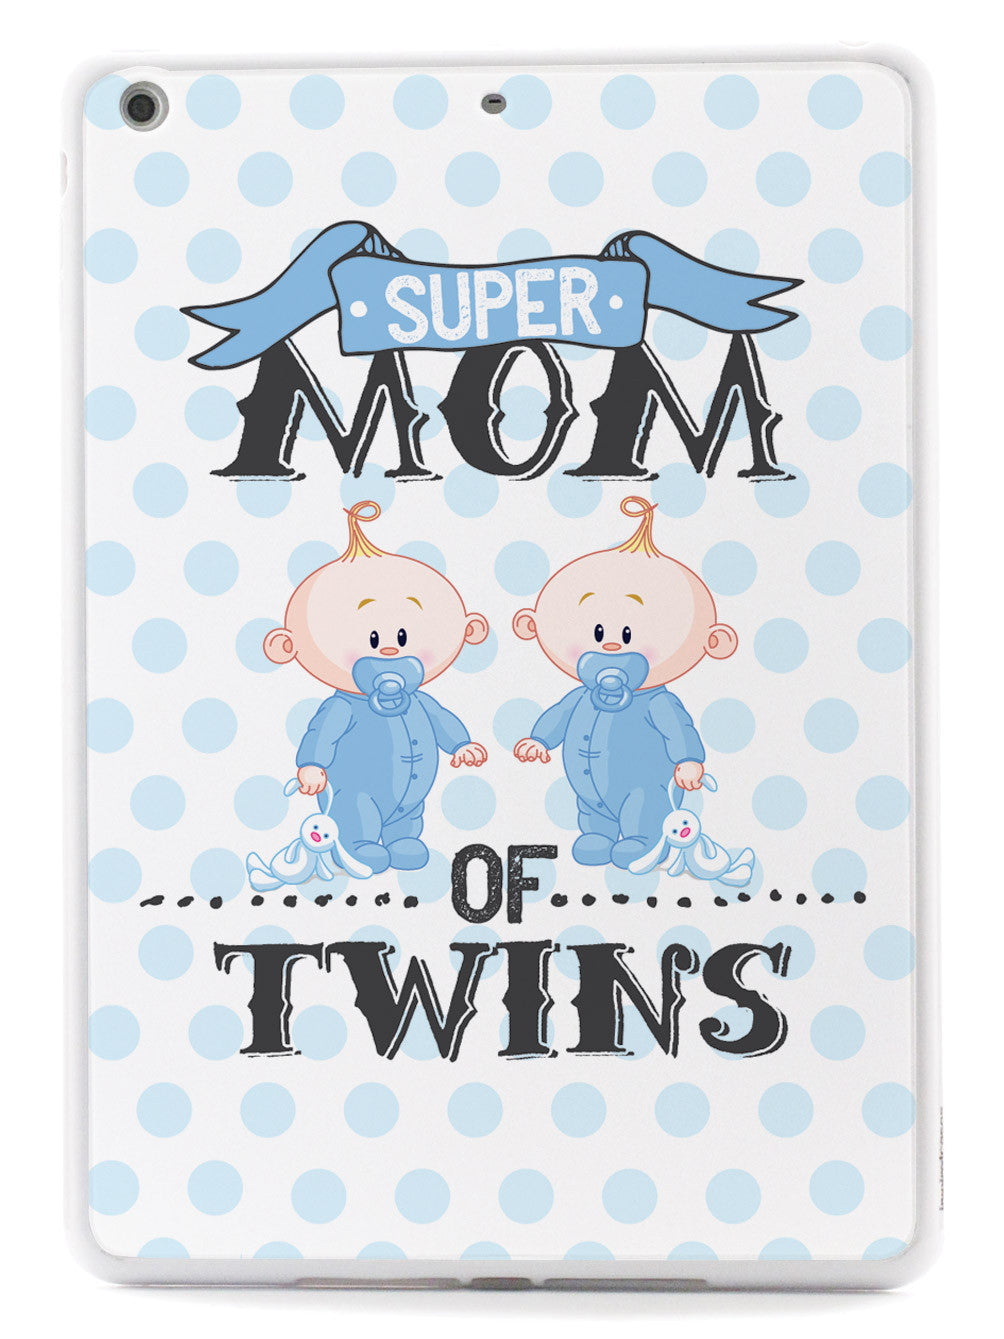 Super Mom of Twins - Boys Case